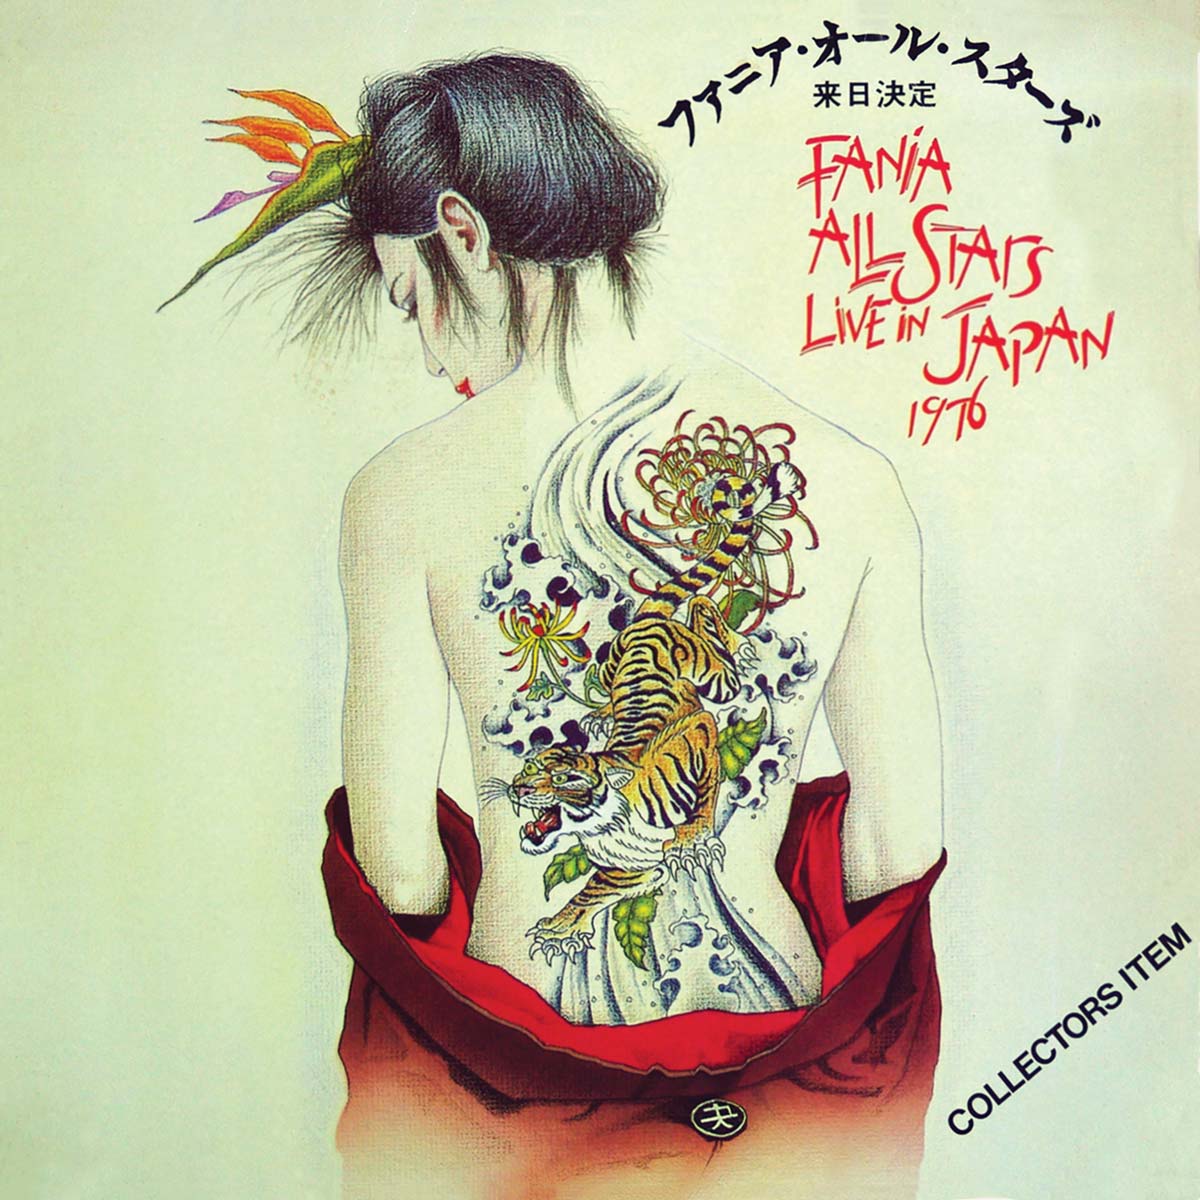 Imagen destacada de “FANIA ALL STARS VIVEN EN JAPÓN 1976”